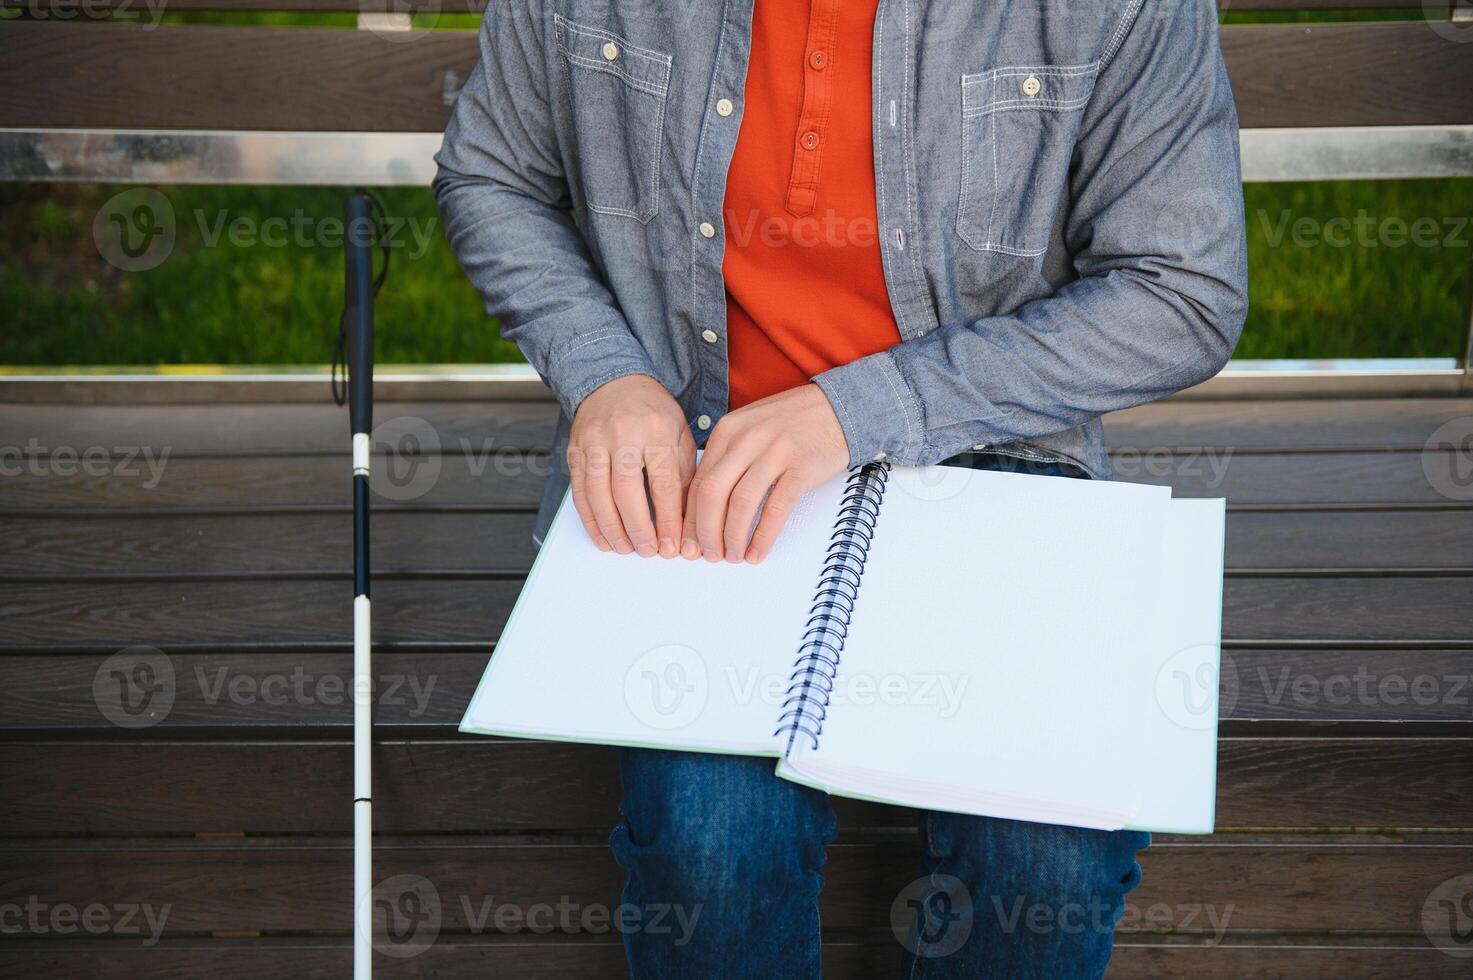 verblind Mens lezing door aanraken braille boek foto